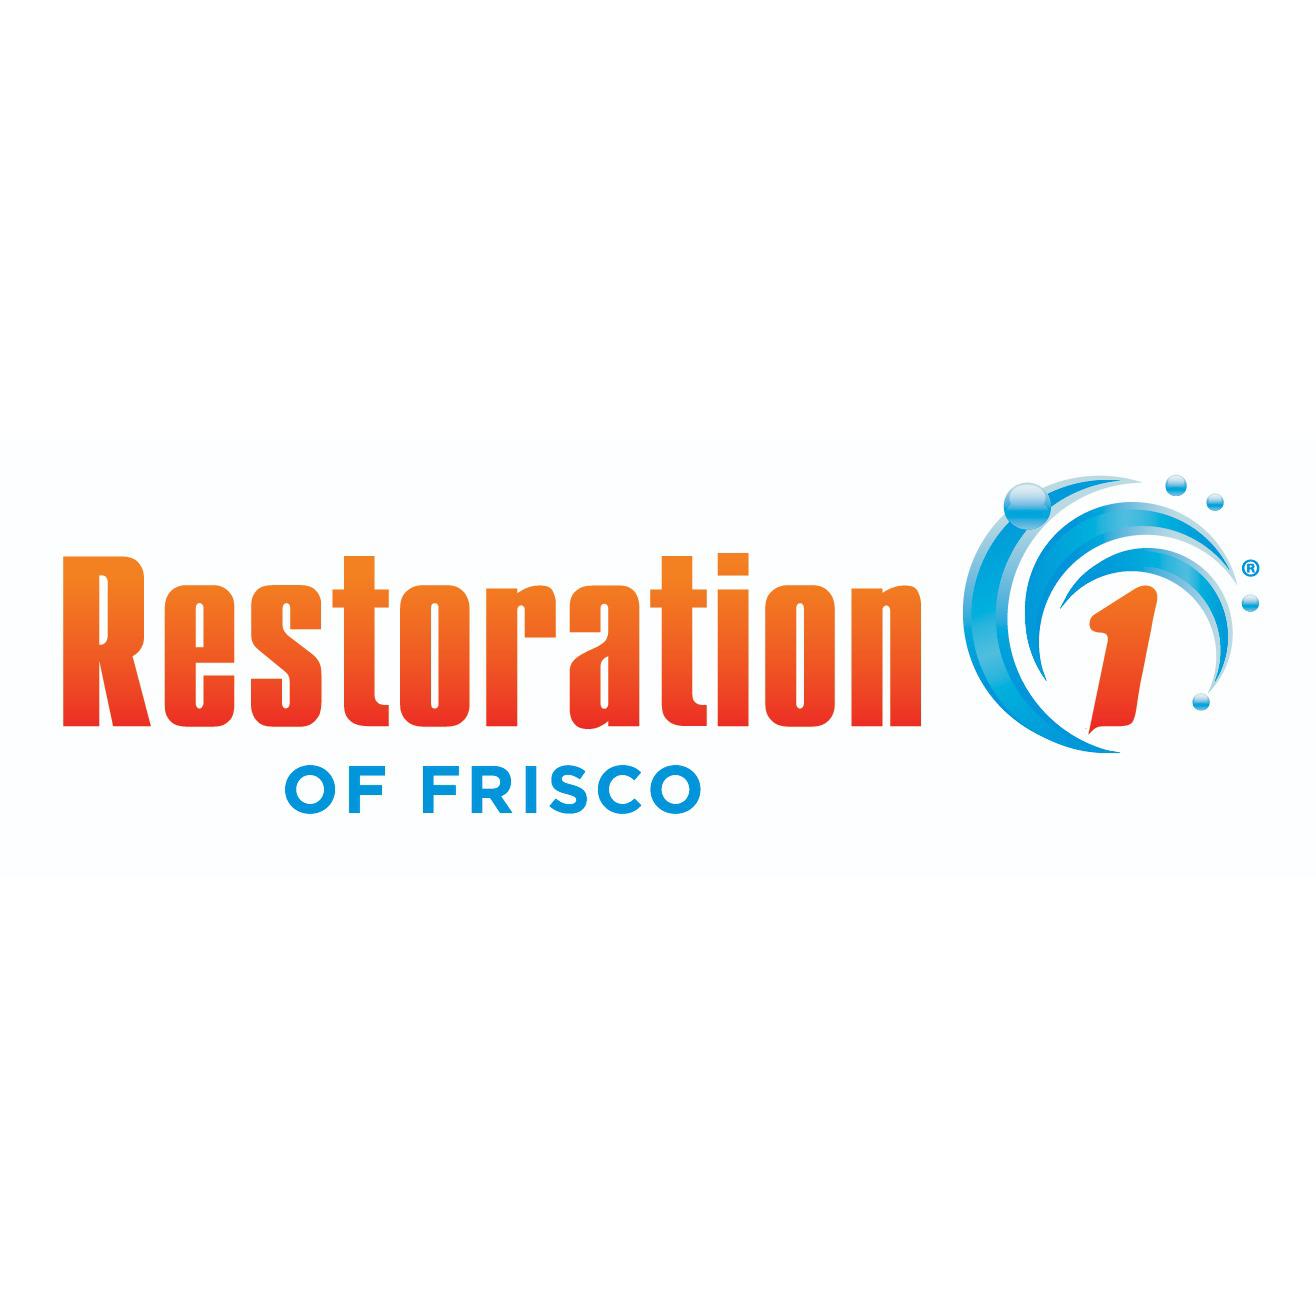 Restoration 1 of Frisco